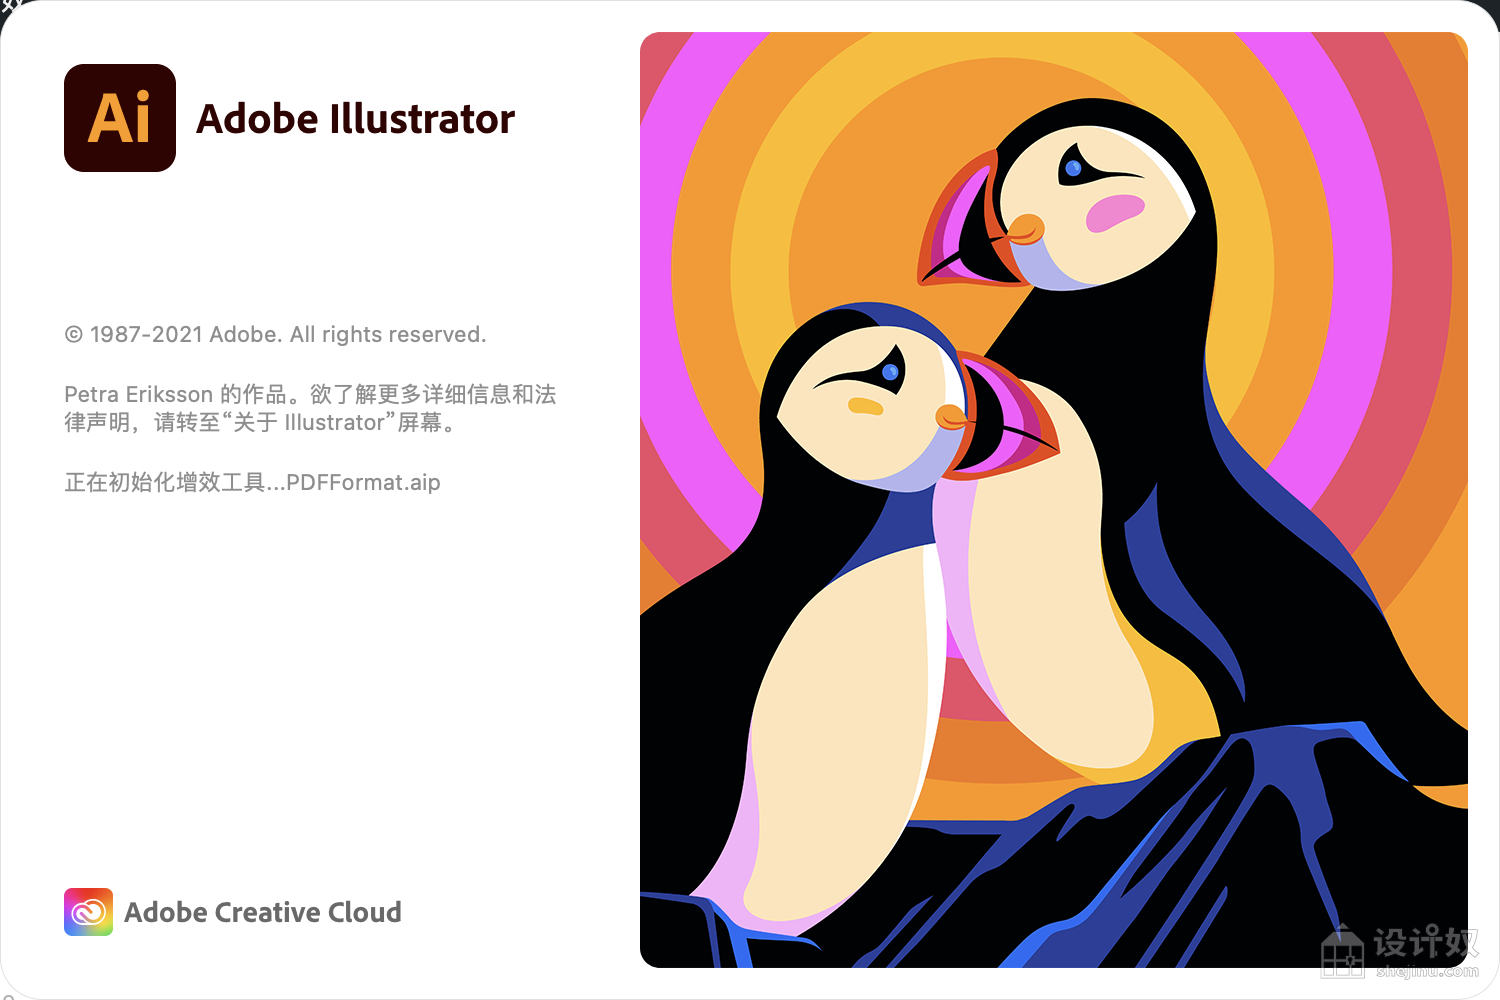 【MAC M1】亲测可用 Illustrator 2022 for Mac v26.0.2 AI 2022中文版M1专用